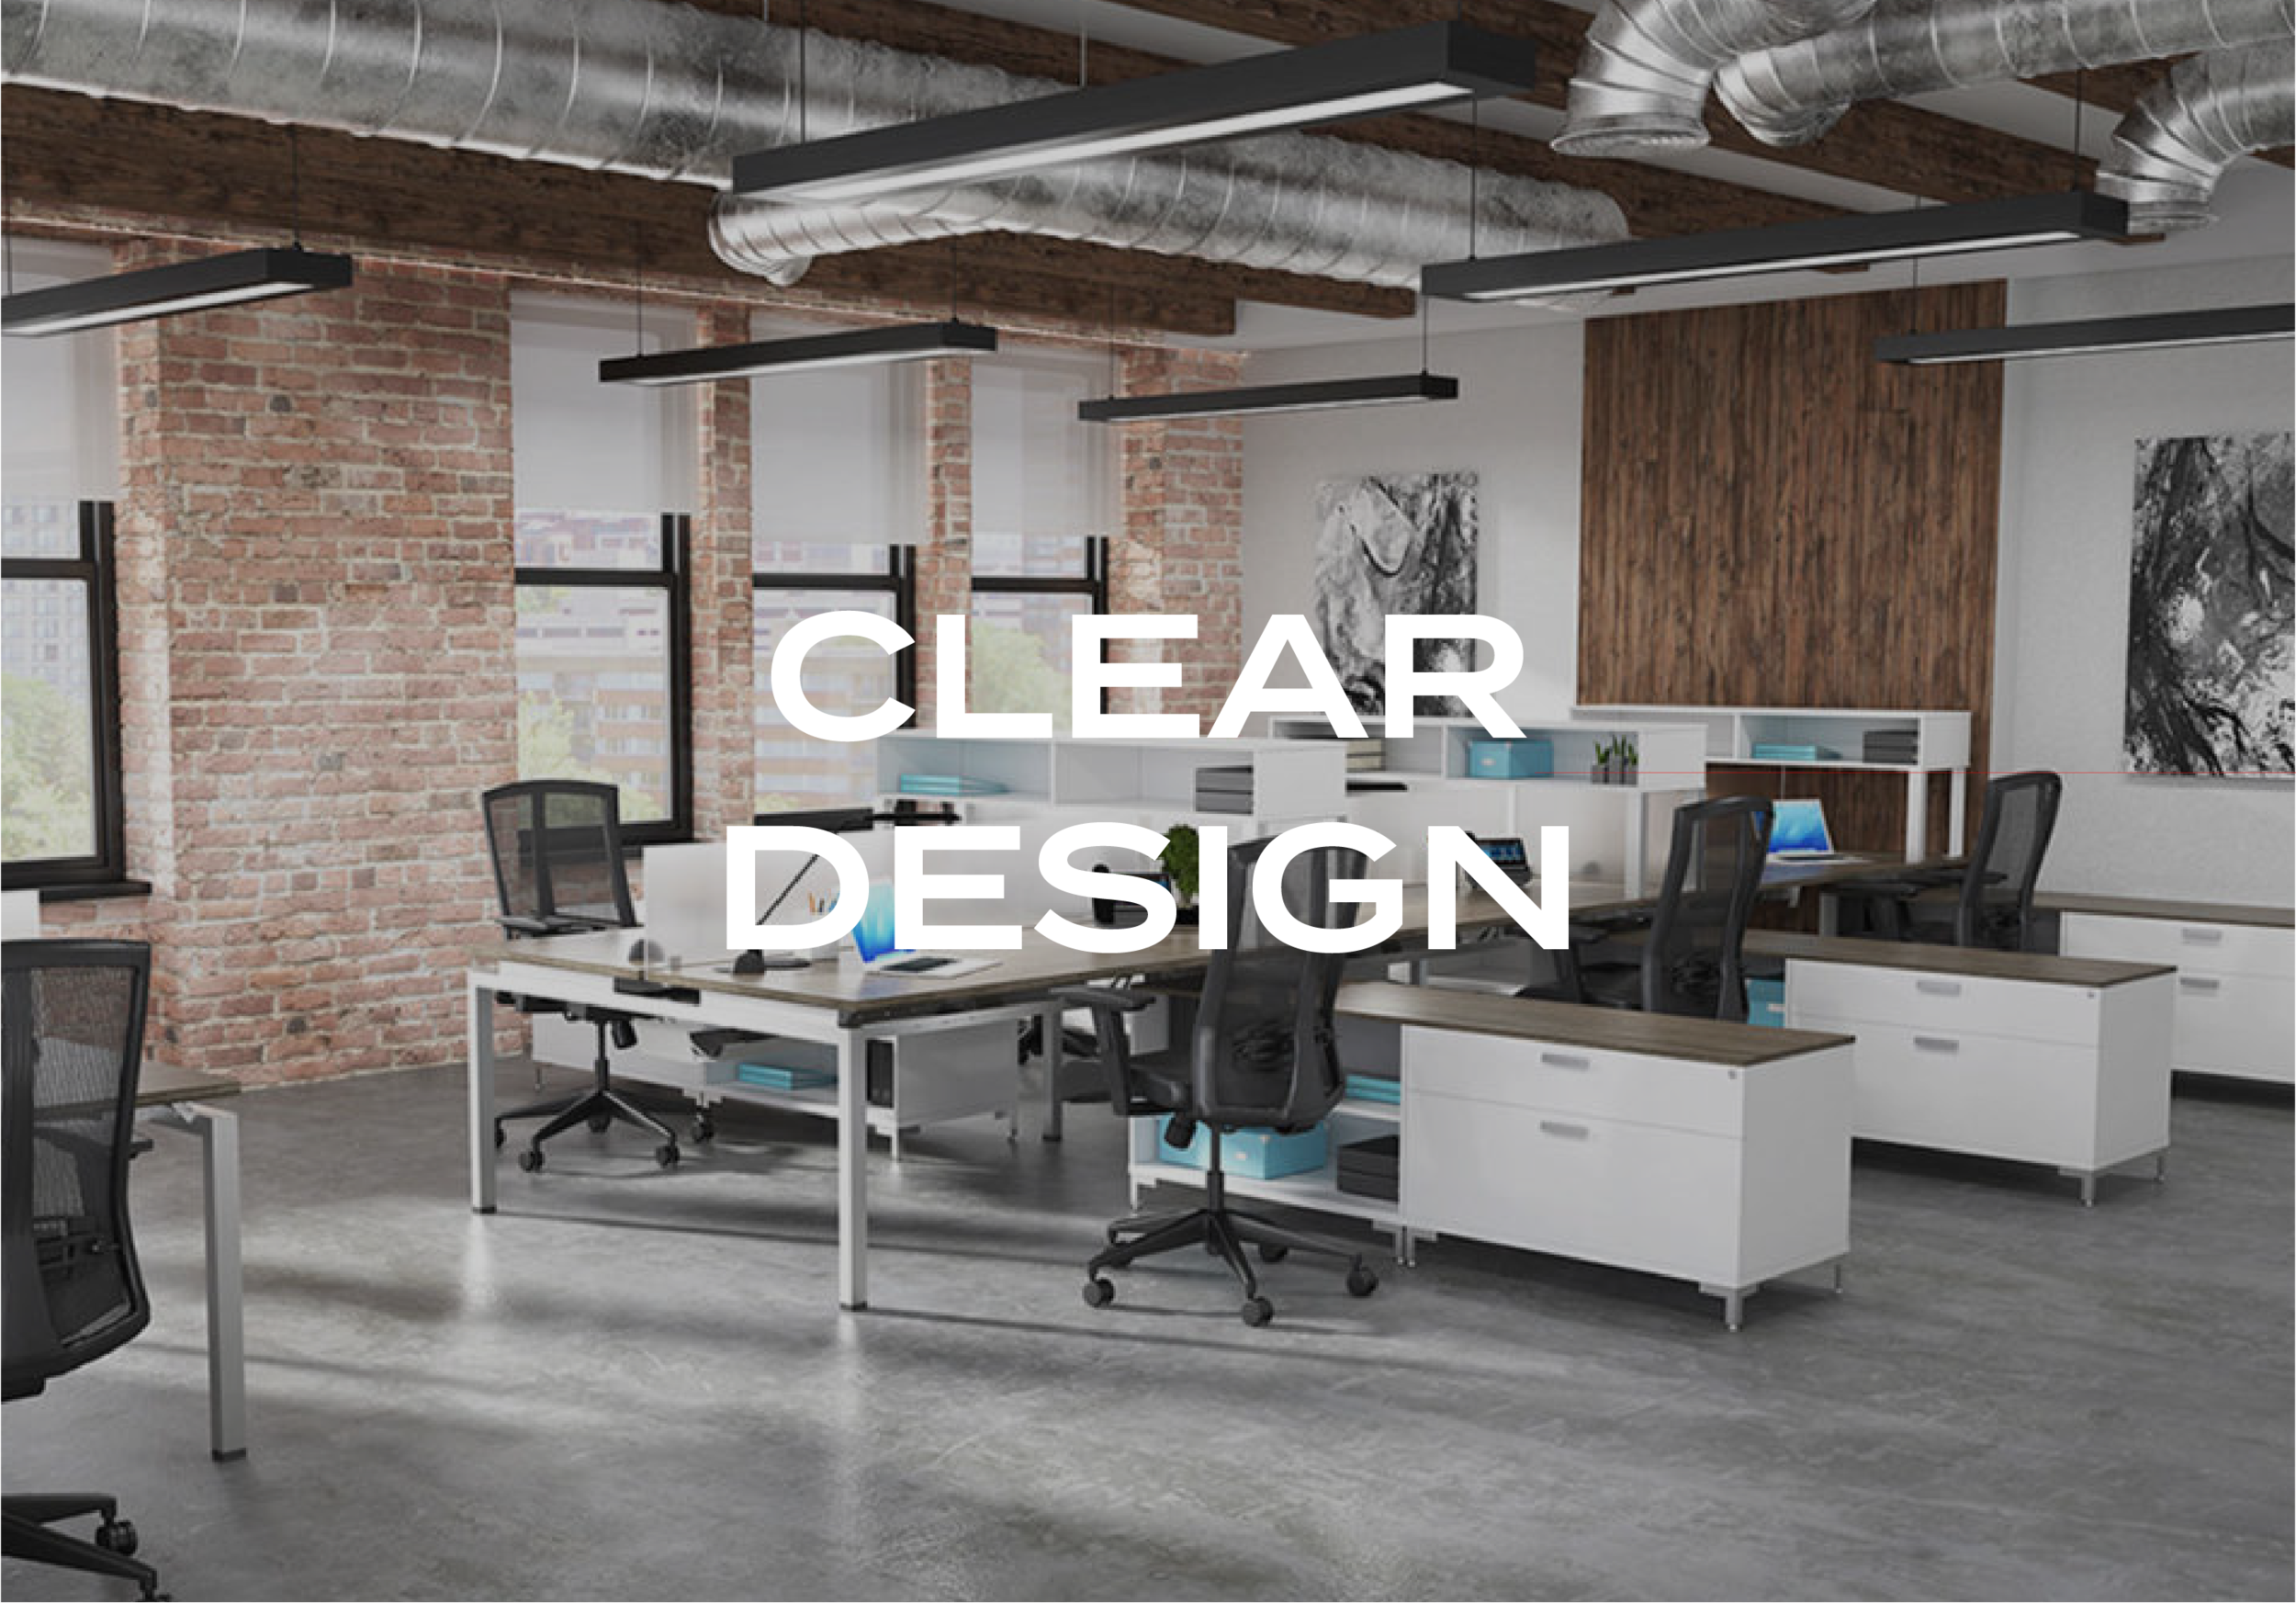 wsp_clear design 2_clear design.png